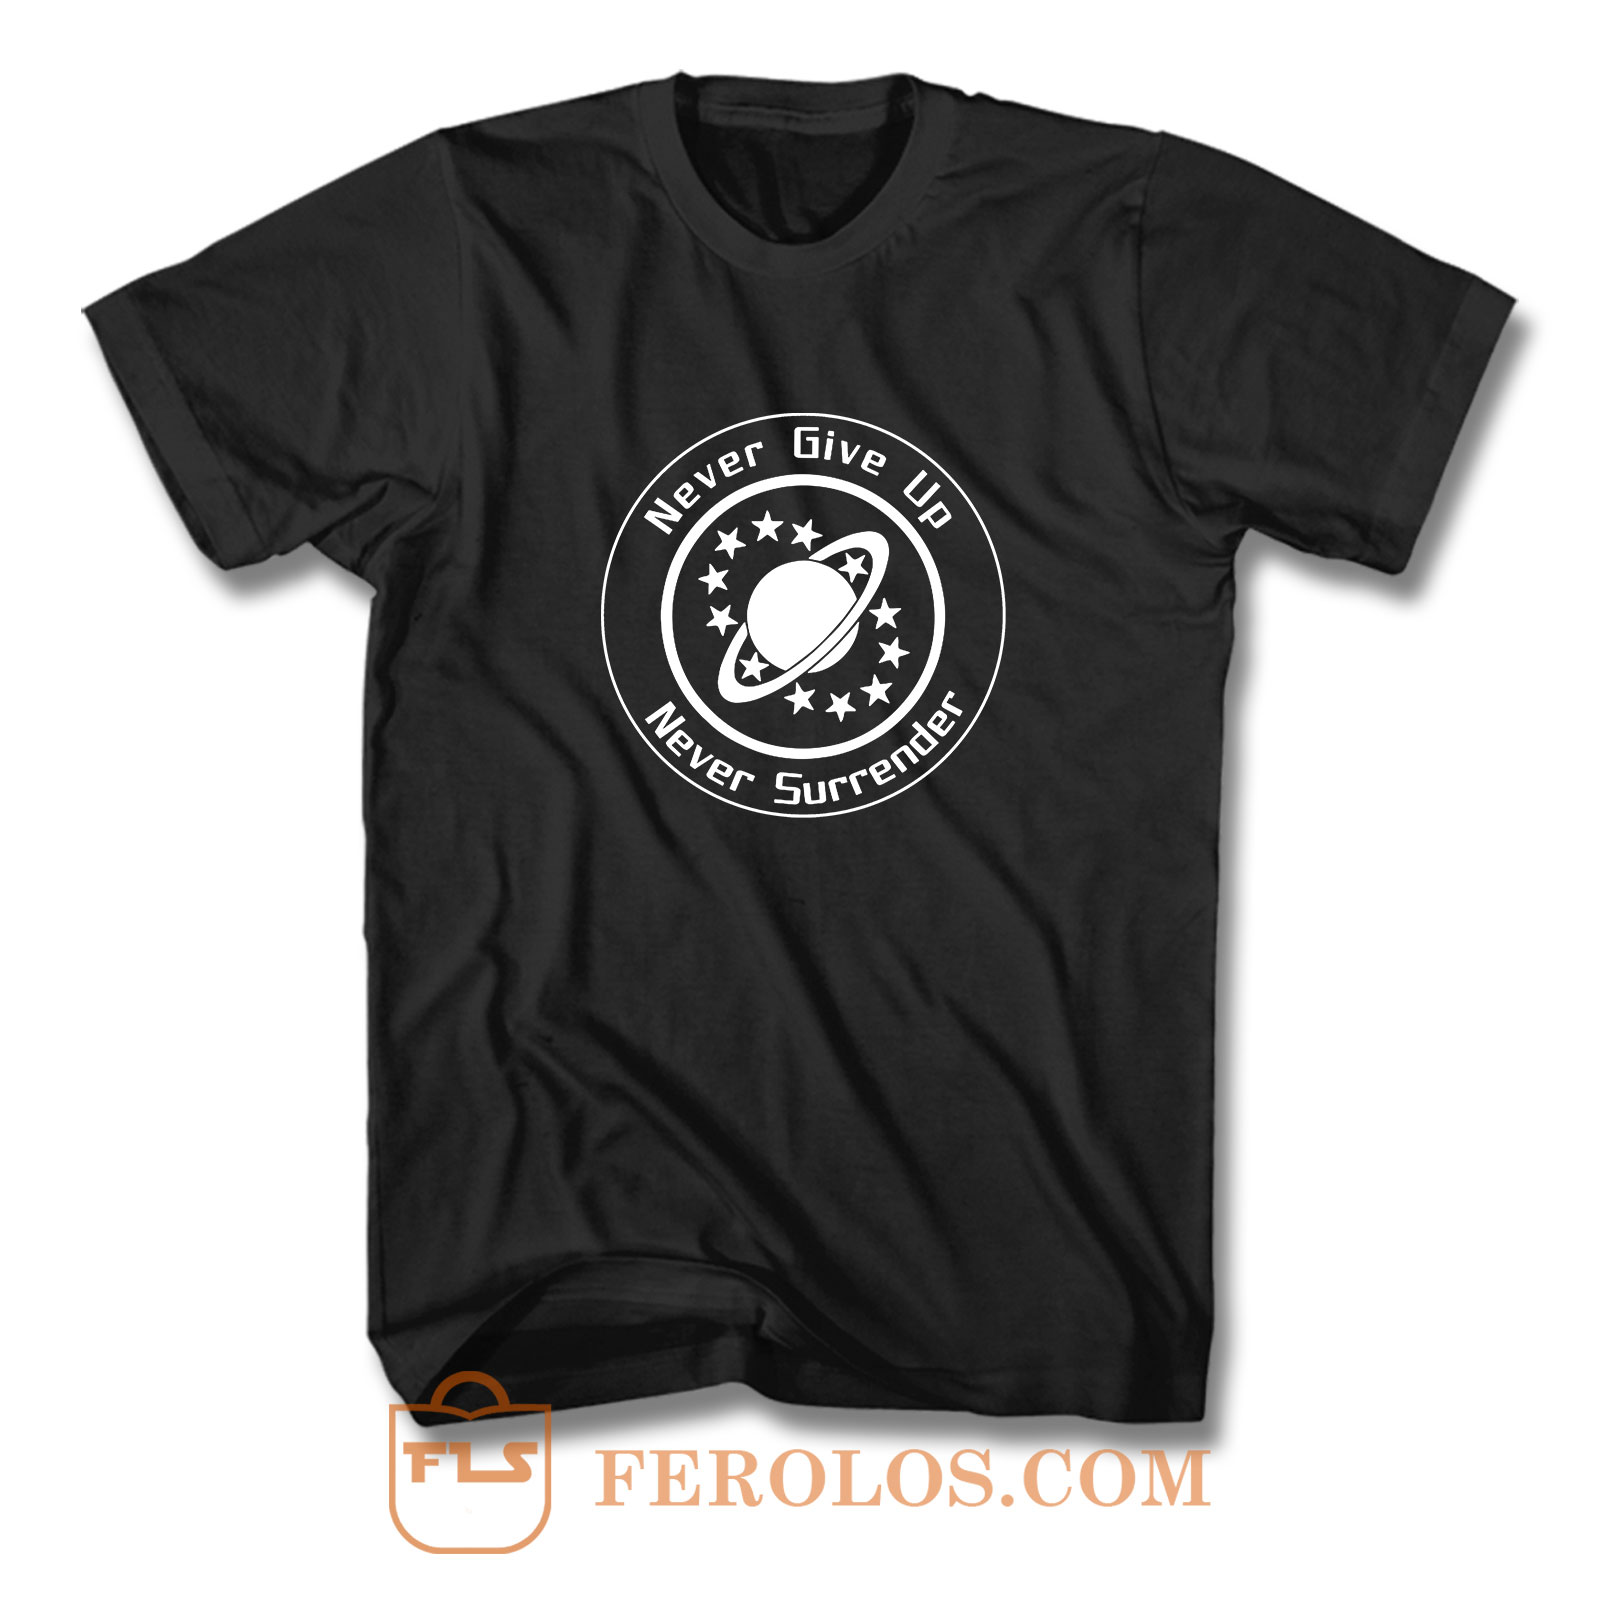 Never Give Up Galaxy Quest T Shirt | FEROLOS.COM